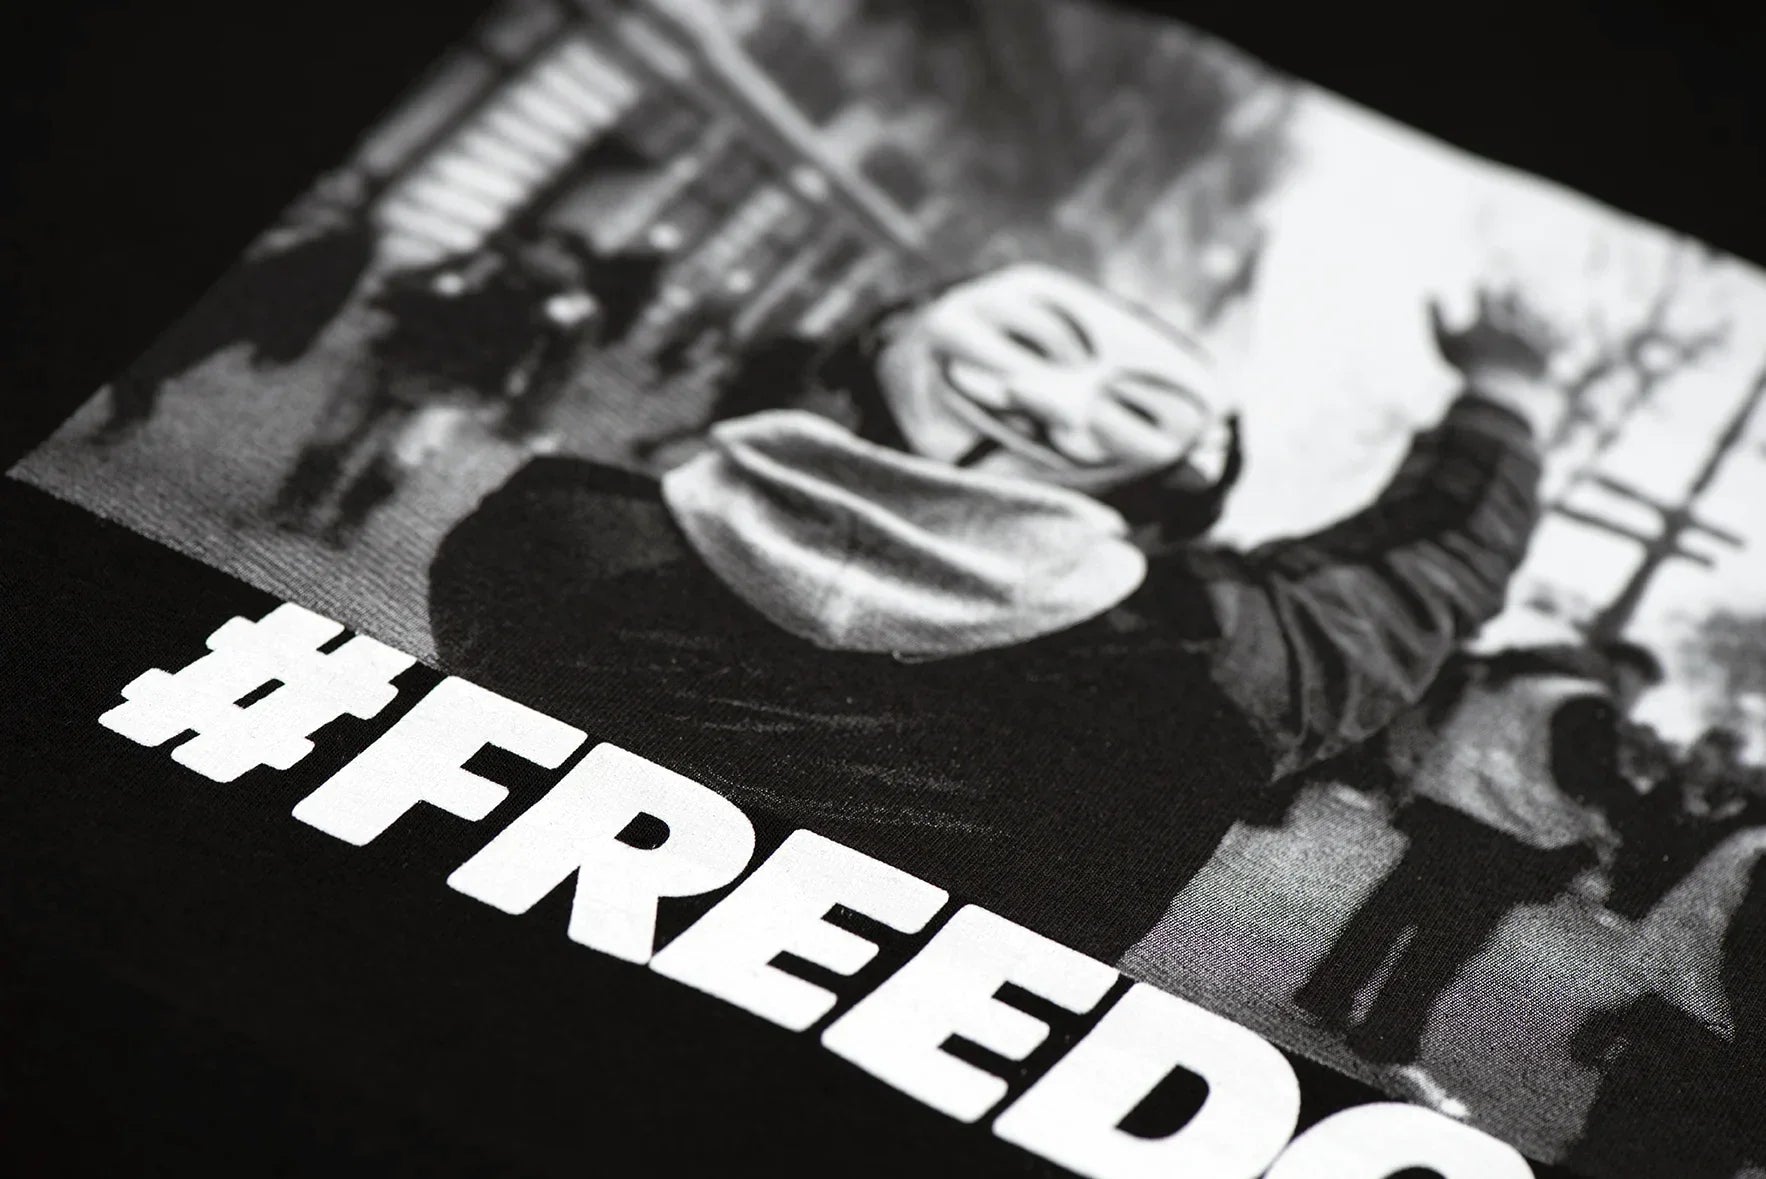 T-shirt Freedom - Noir -f